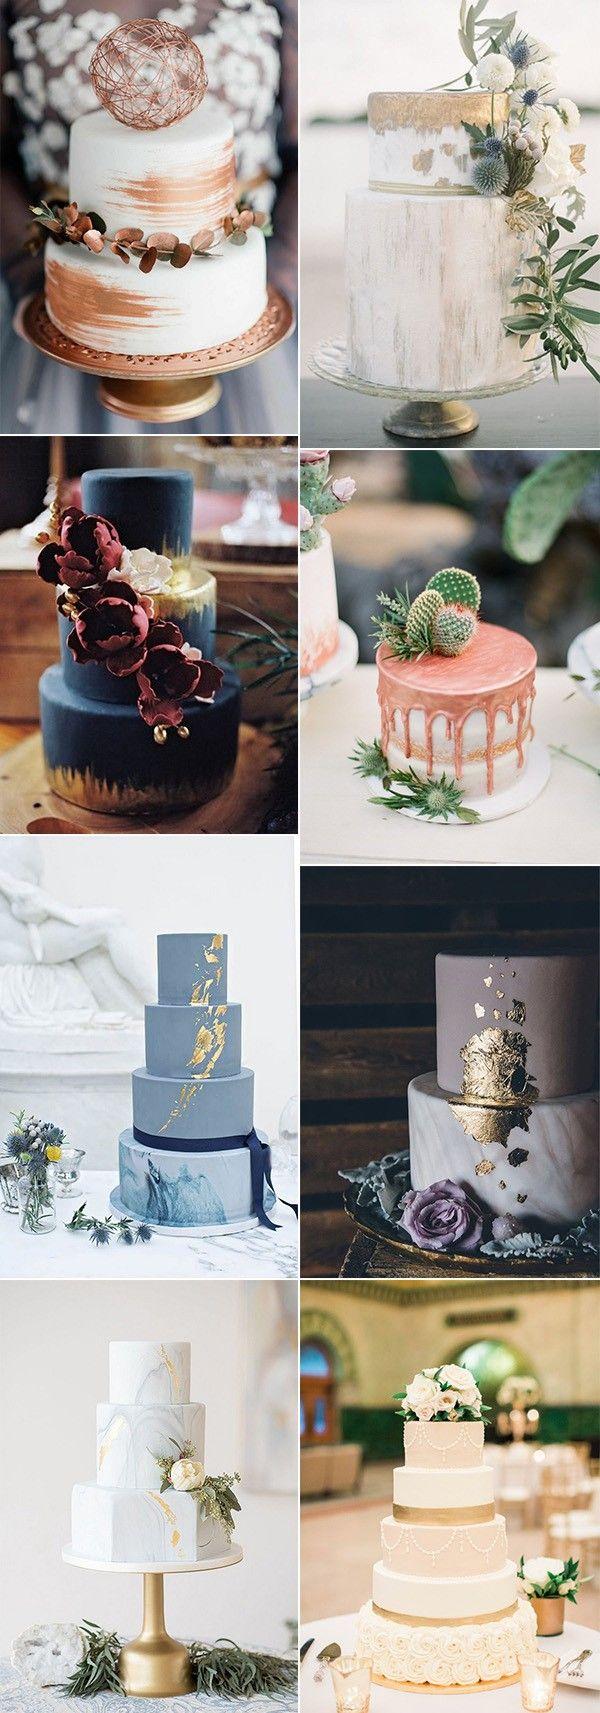 Wedding - Trending-15 Creative Metallic Wedding Cakes For 2018 - Page 2 Of 2